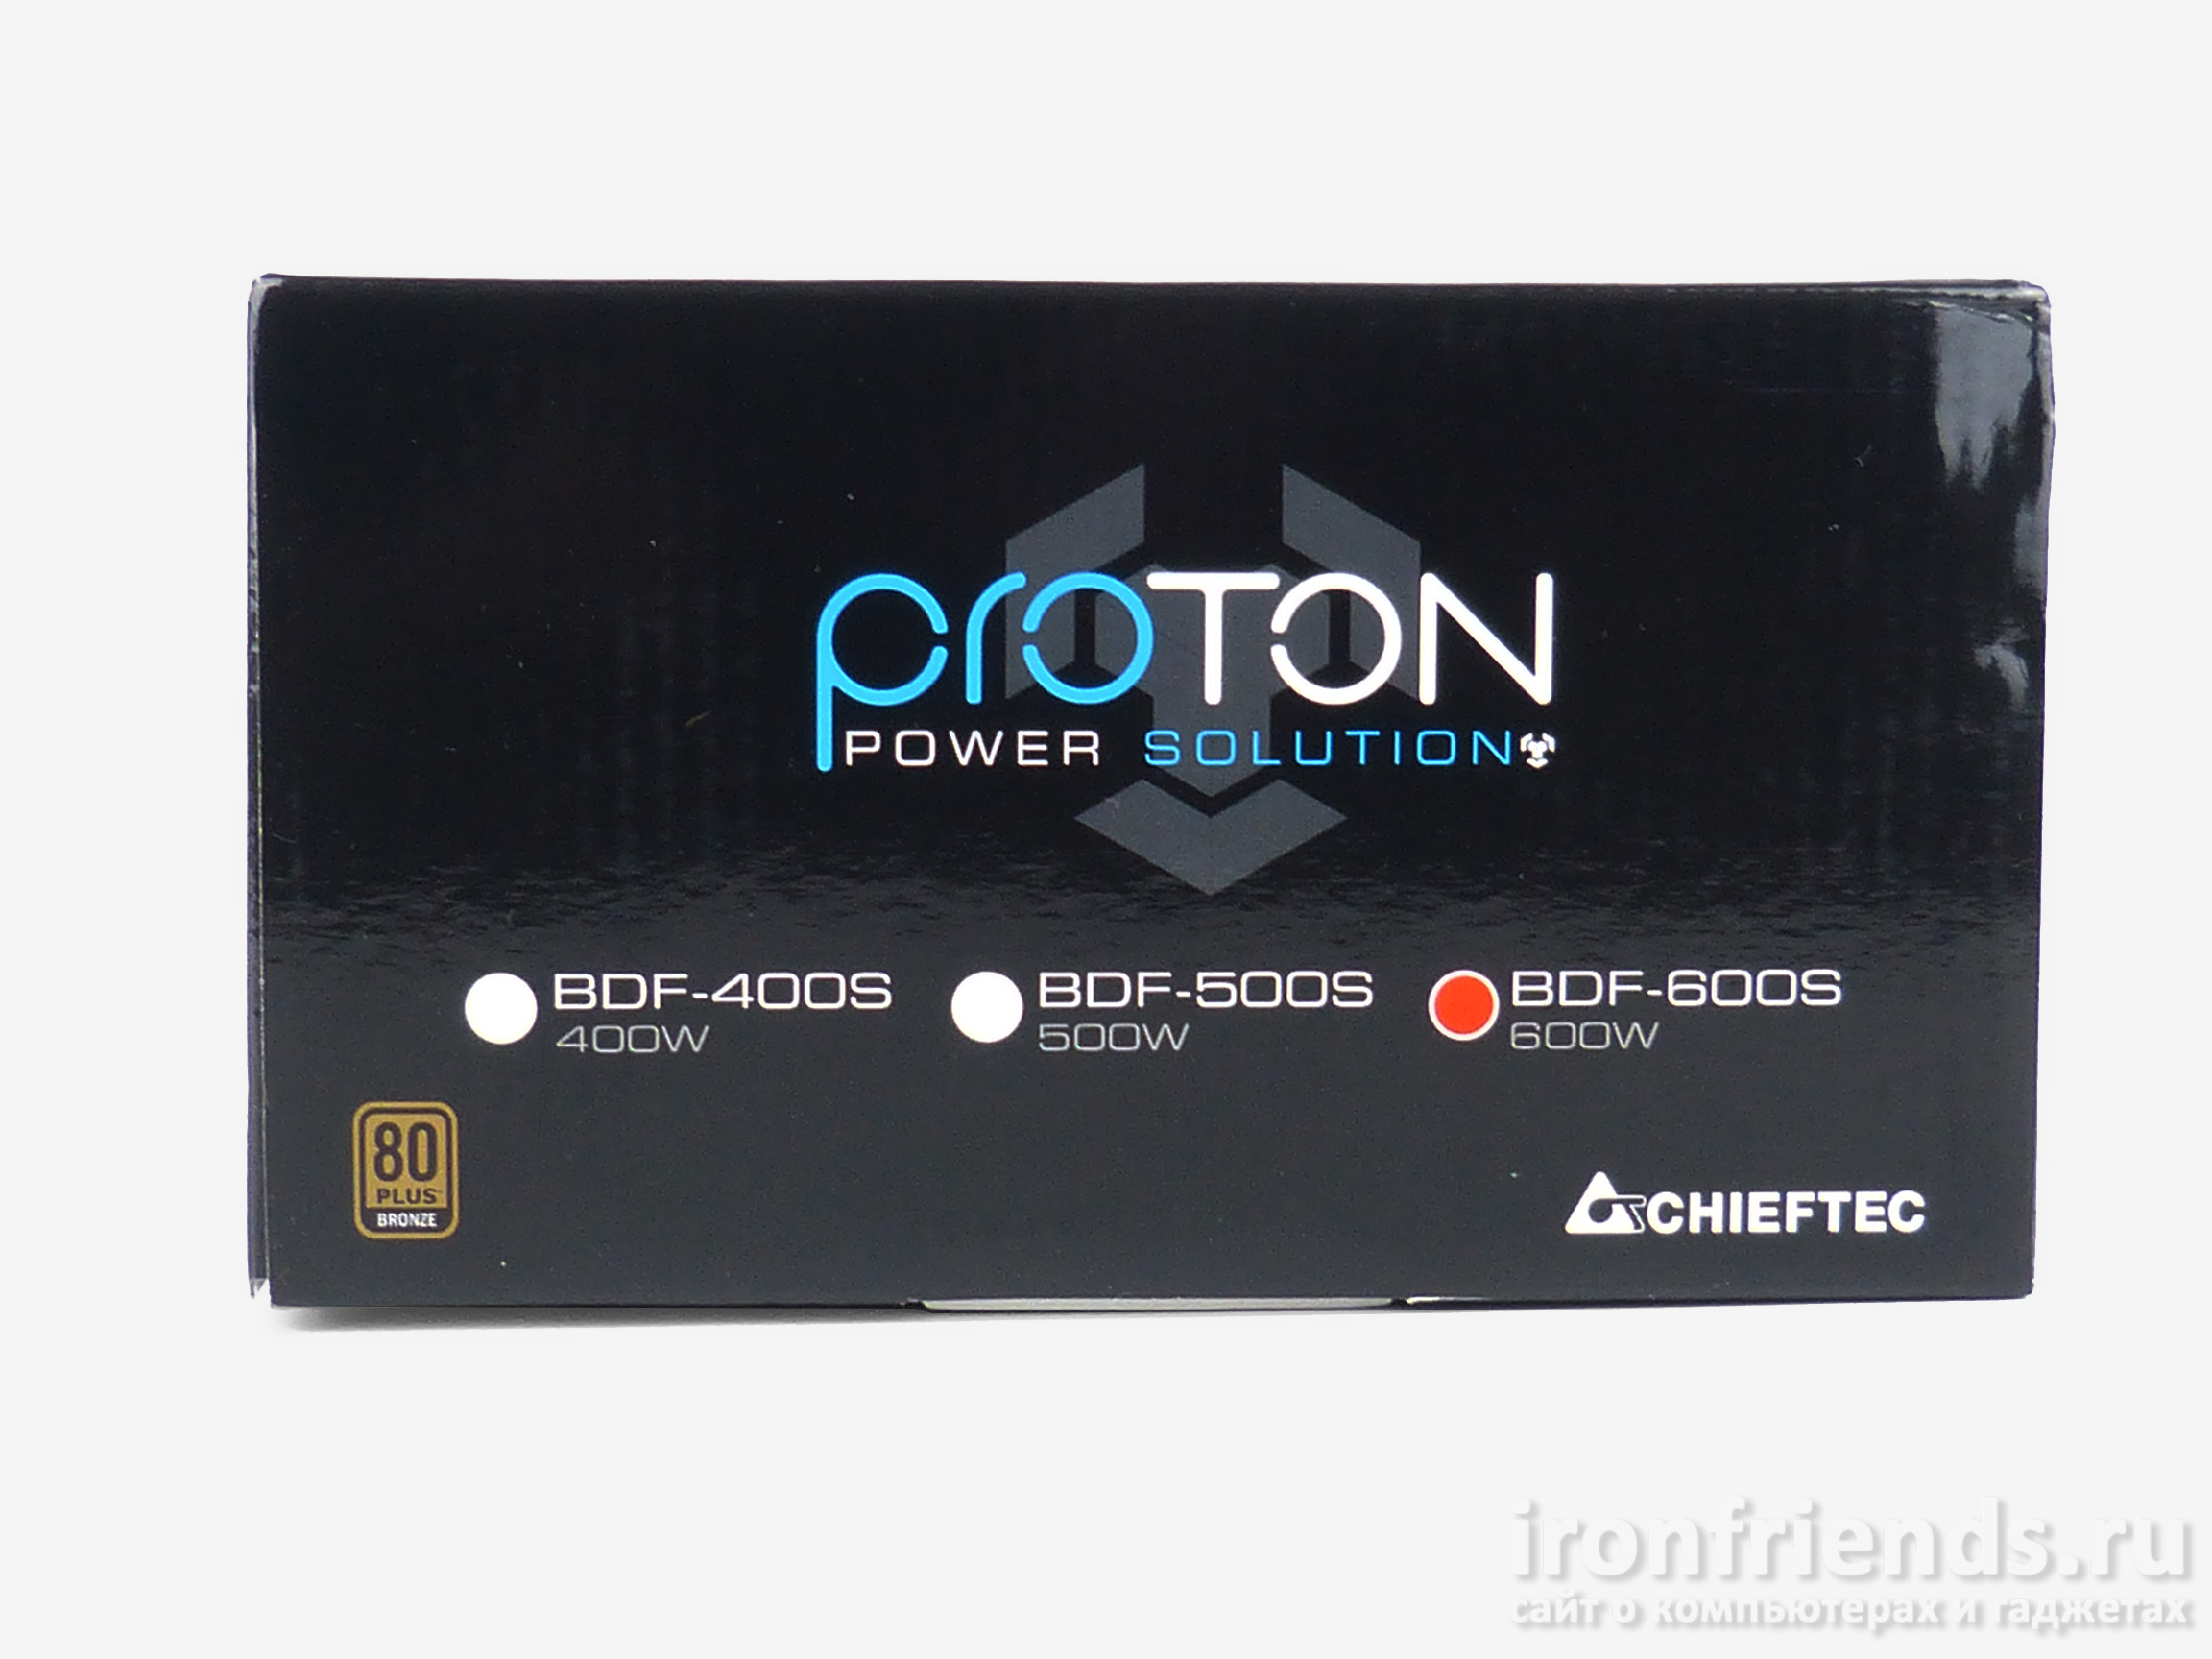 Упаковка Chieftec Proton BDF-600S